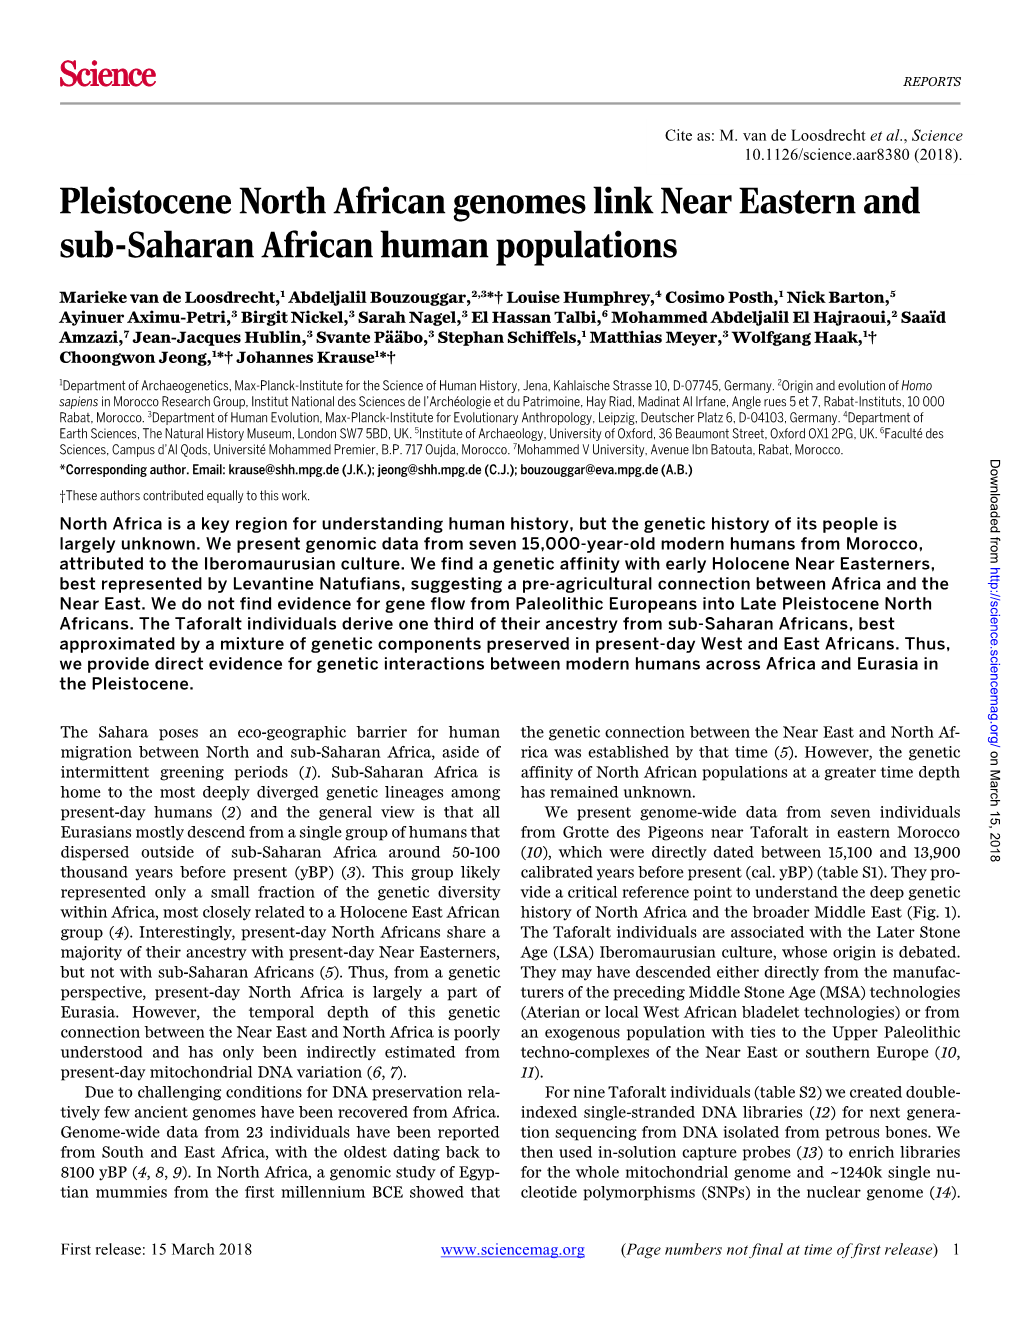 Pleistocene North African Genomes Link Near Eastern and Sub-Saharan African Human Populations